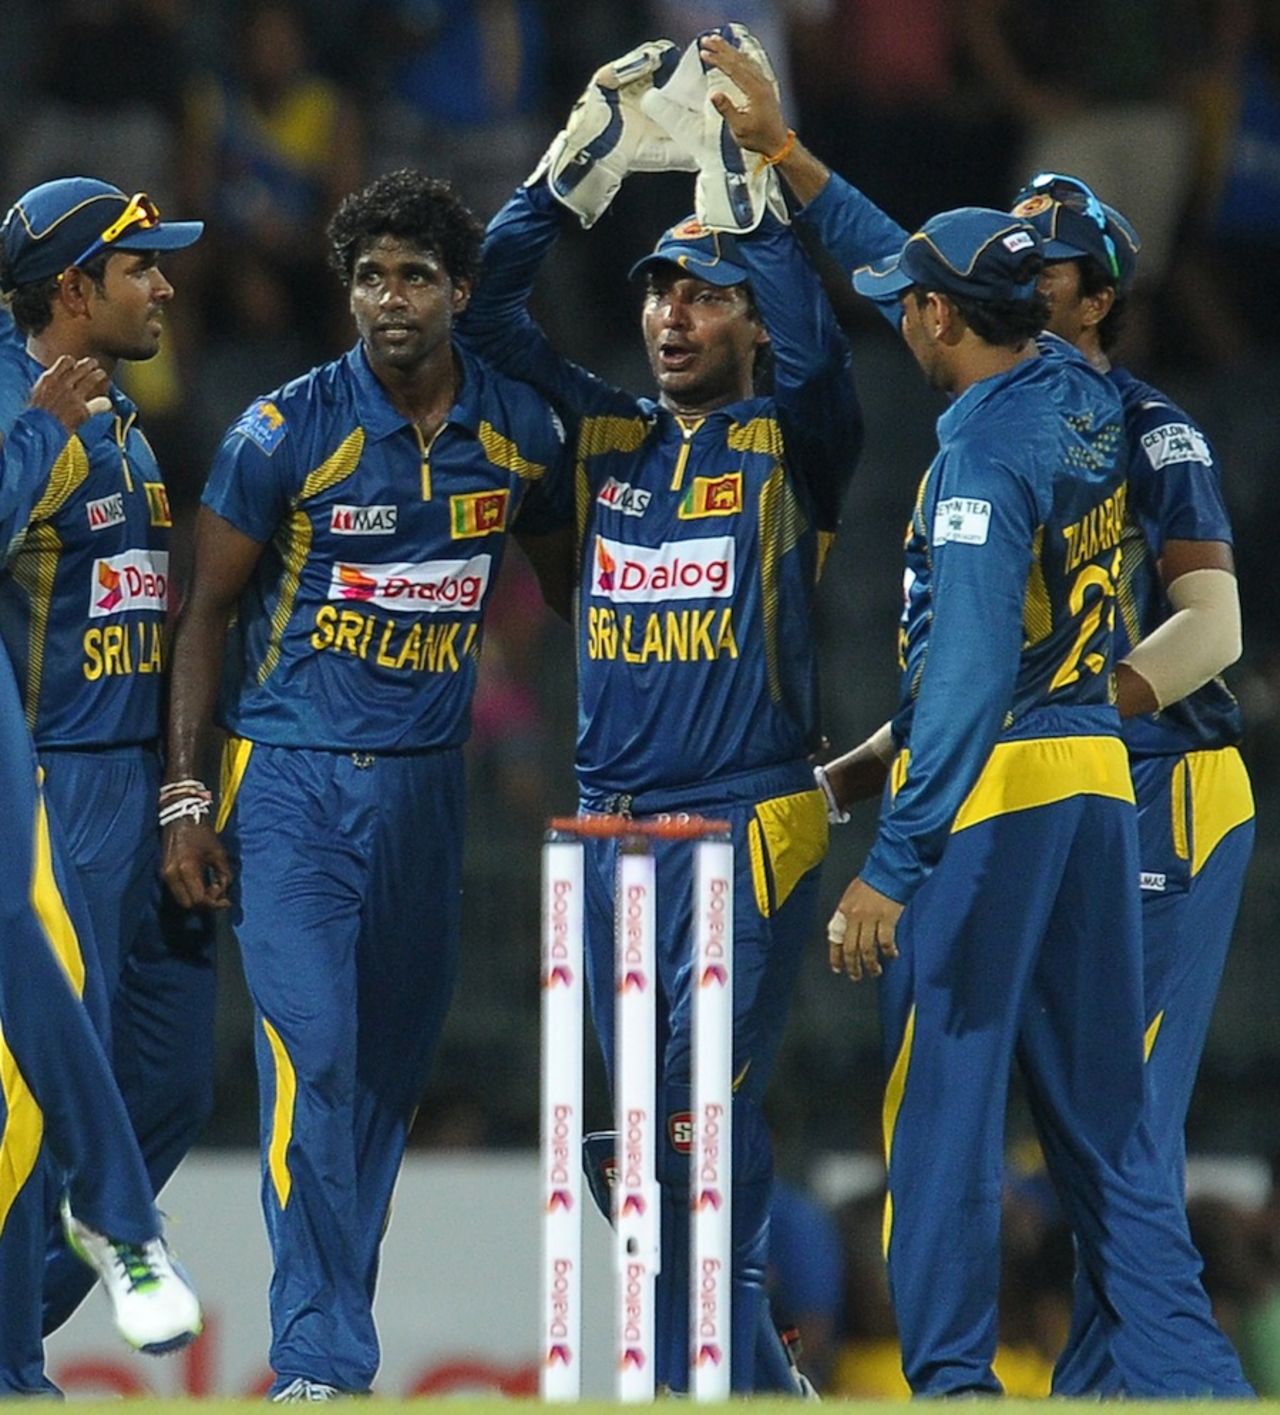 Shaminda Eranga celebrates JP Duminy's wicket with team-mates, Sri Lanka v South Africa, 1st ODI, Colombo, July 20, 2013